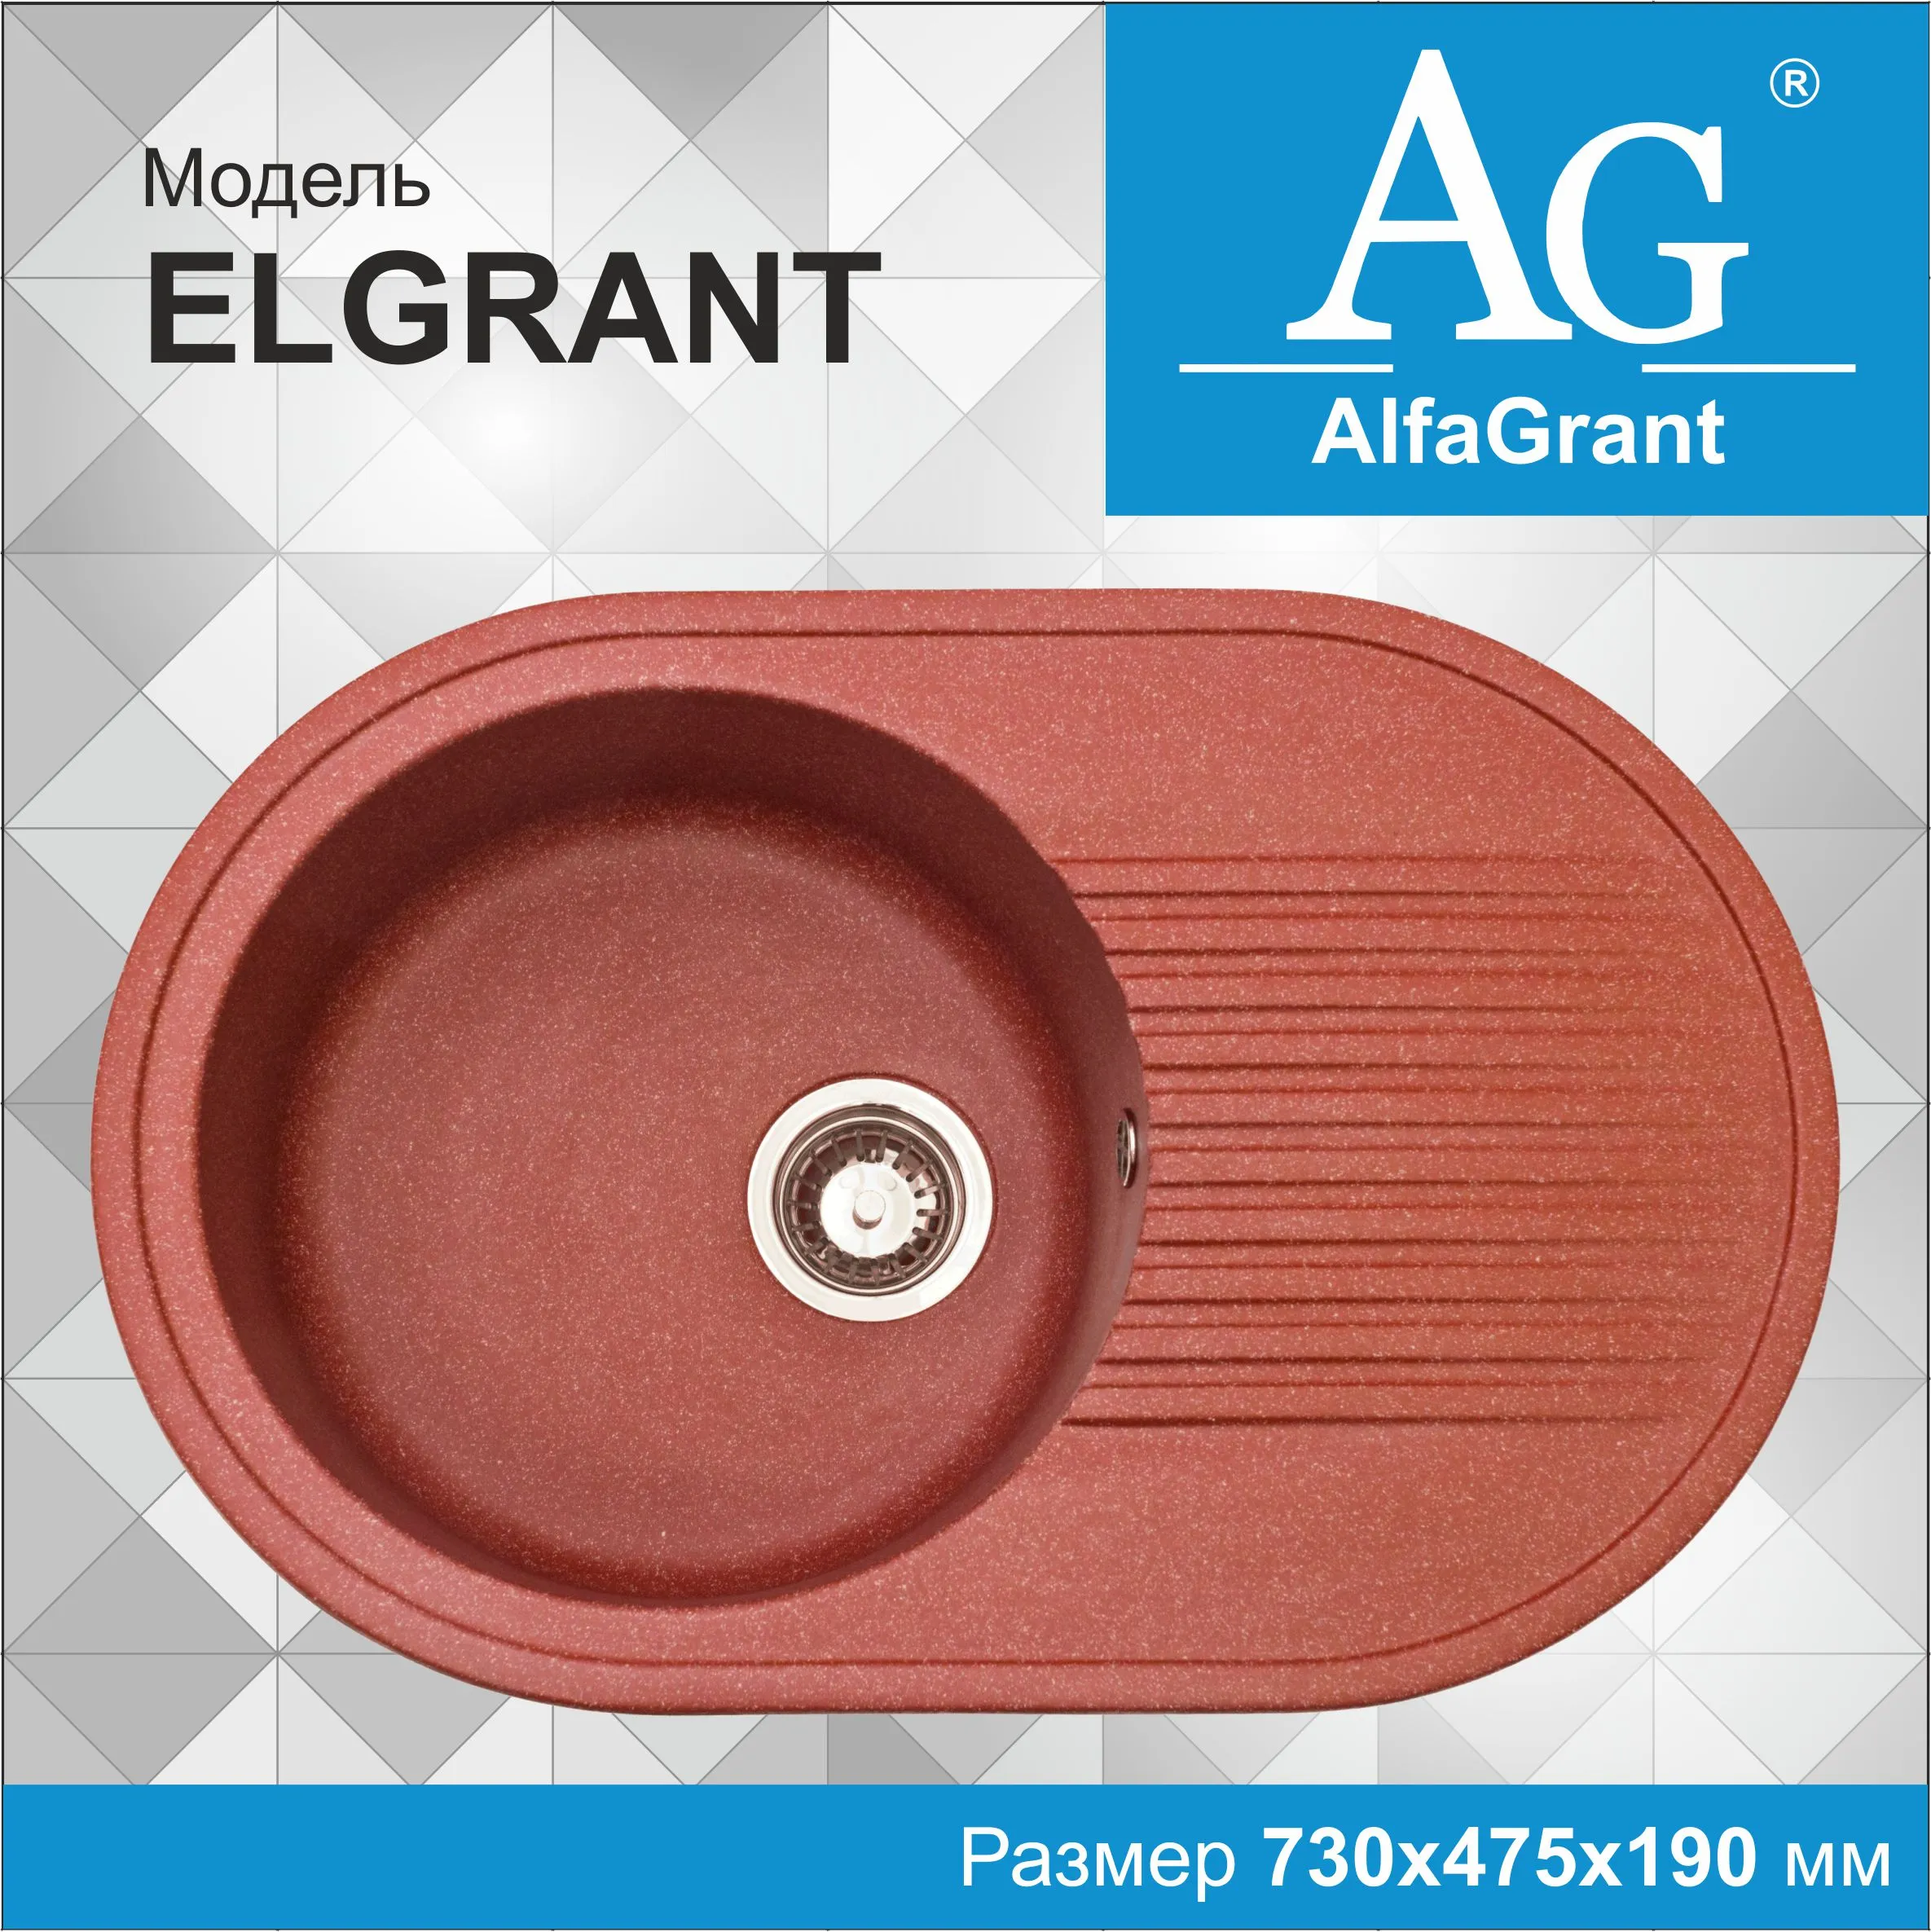 Кухонная мойка AlfaGrant модель ELGRANT (AG-004).#1